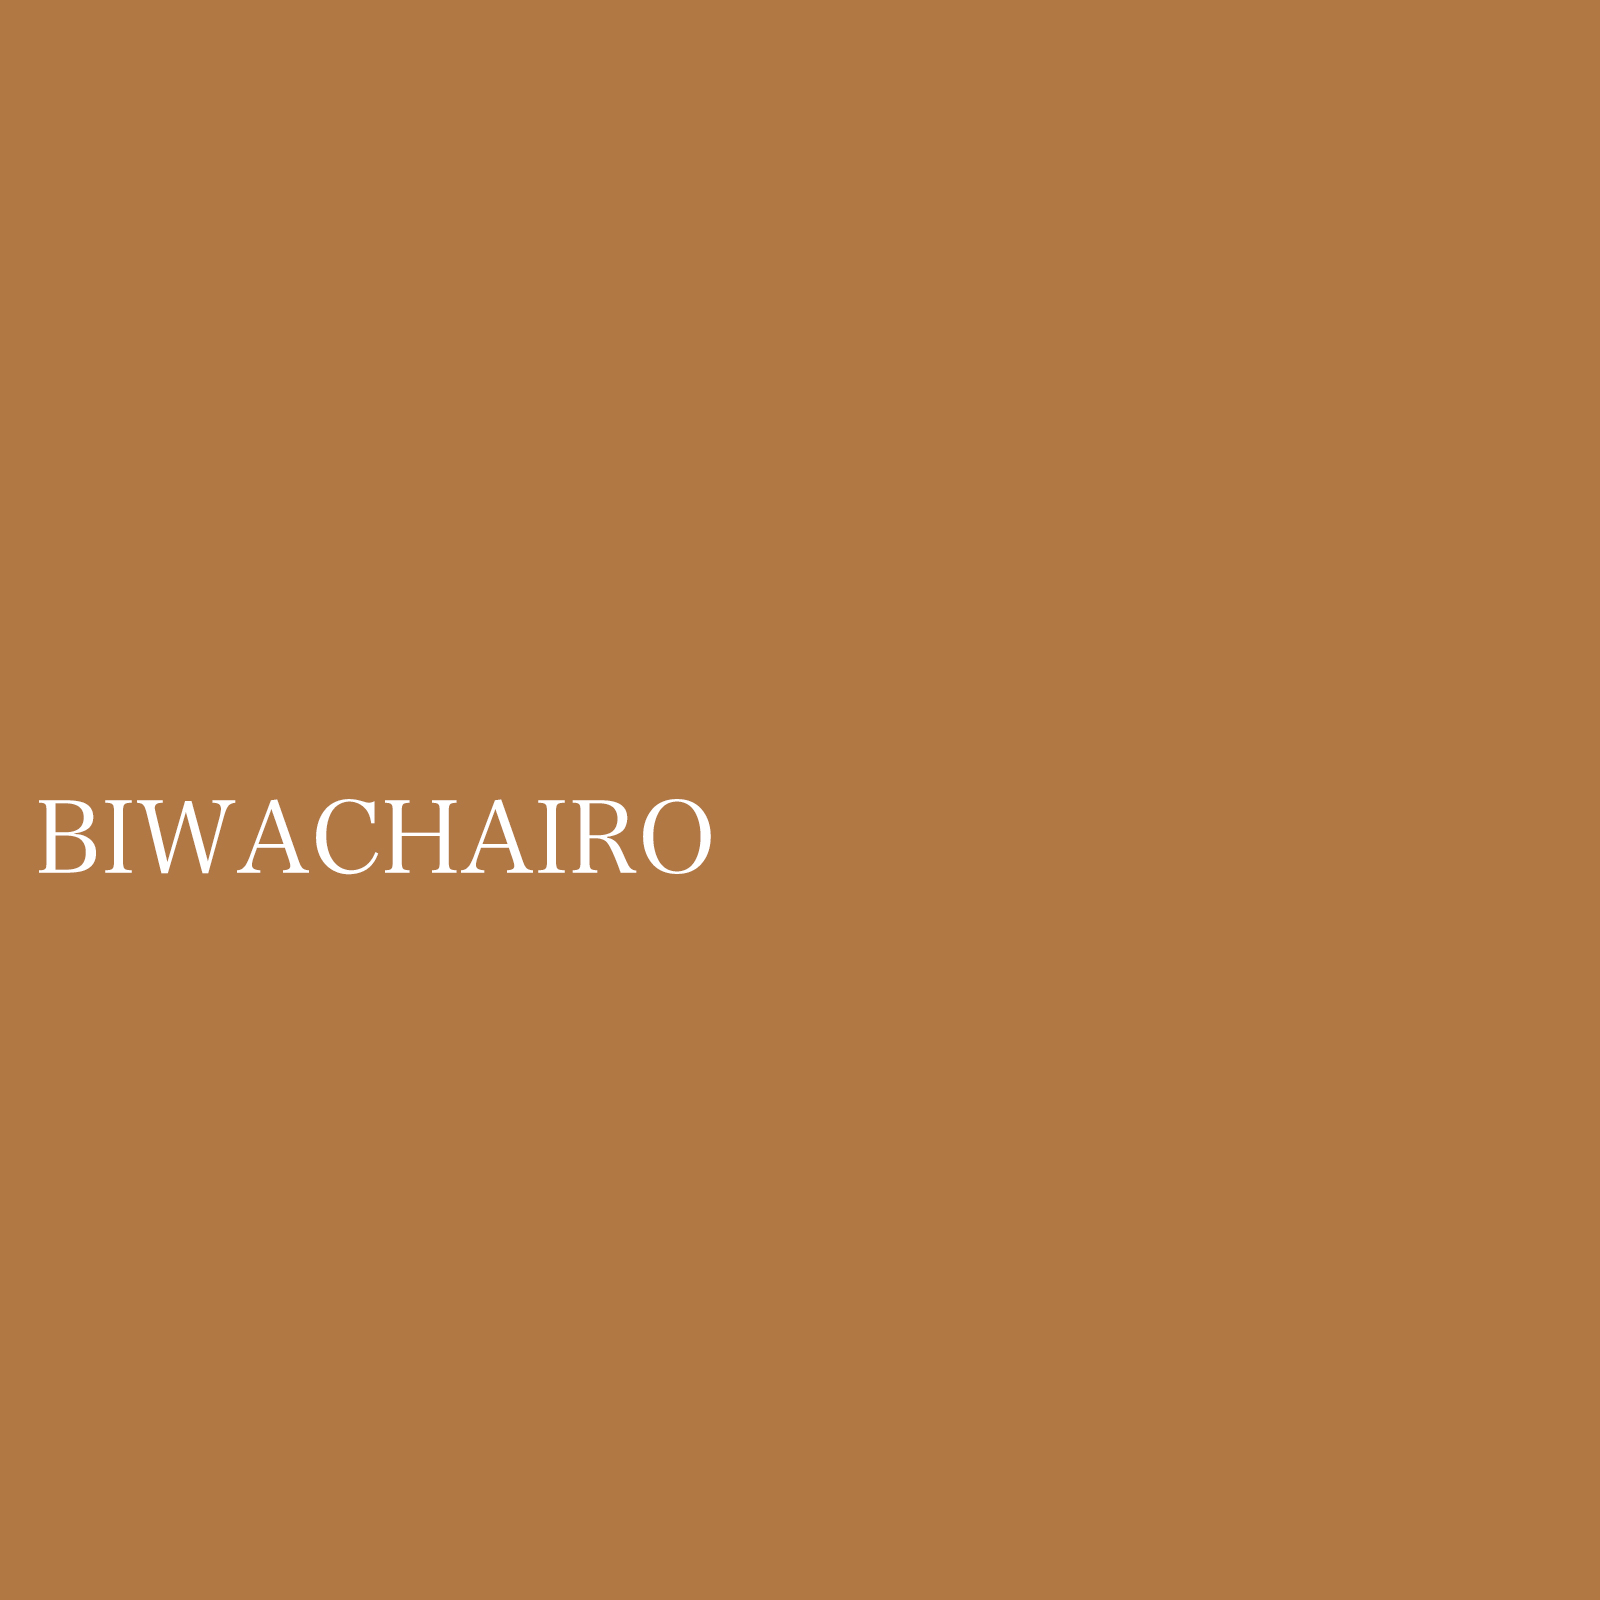 biwatyairo